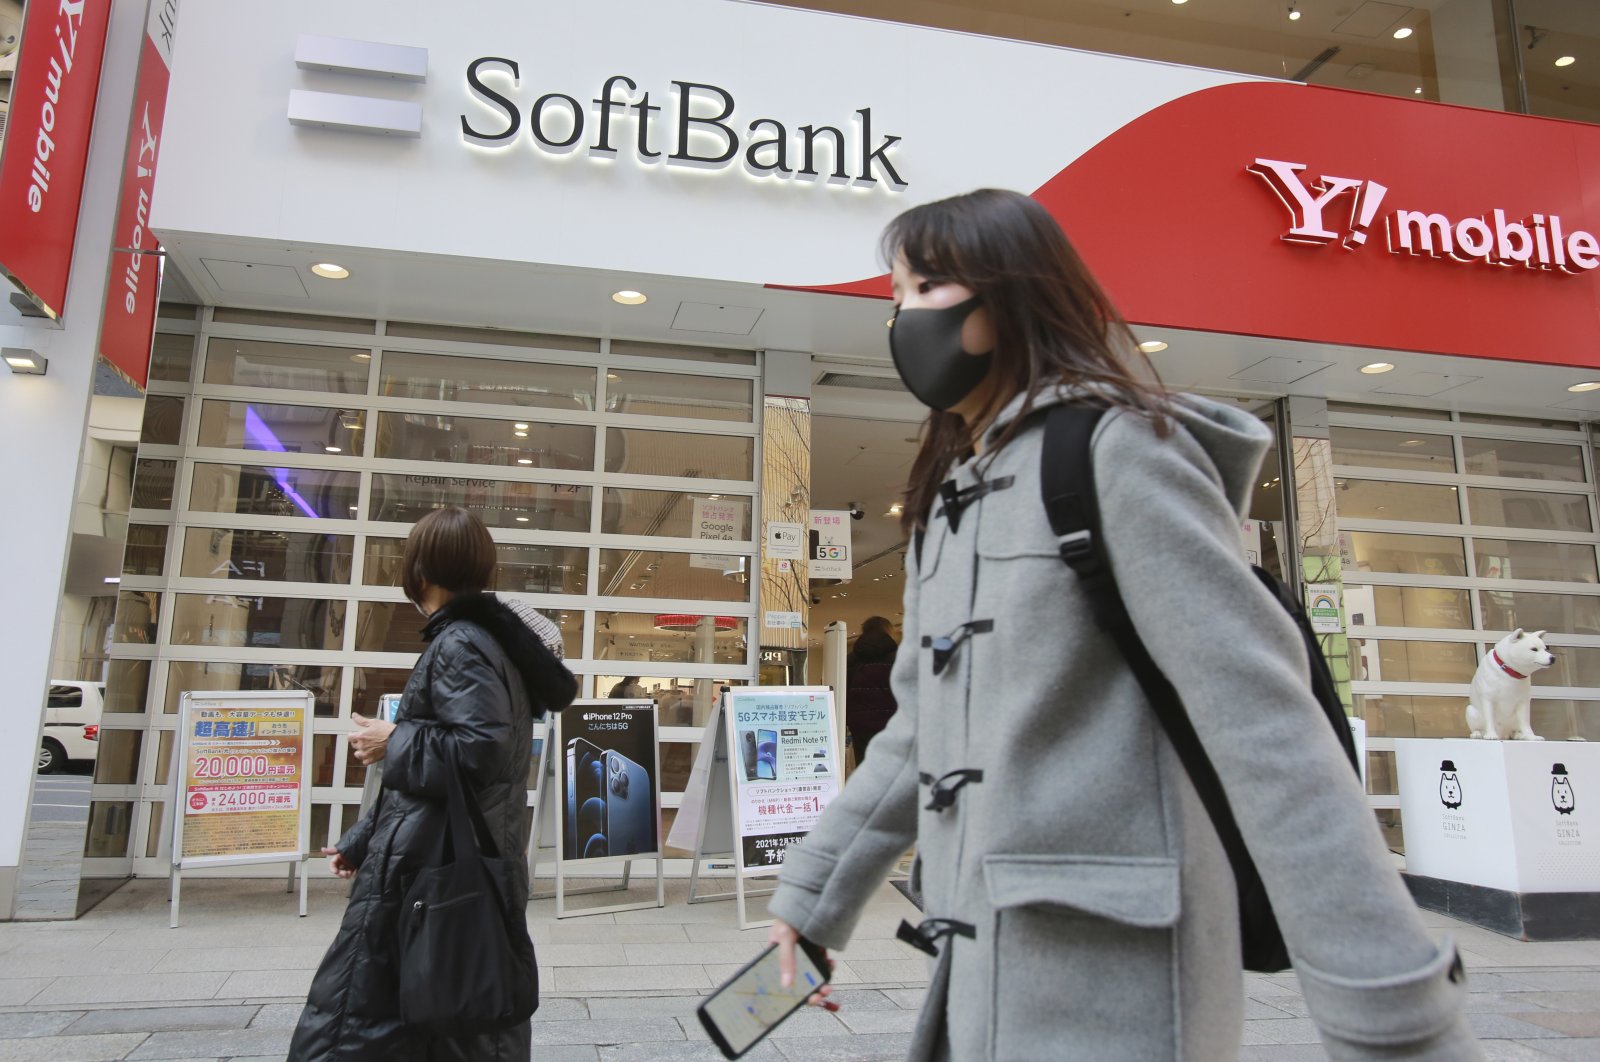 People walk by a SoftBank shop in Tokyo, Japan, Feb. 8, 2021. (AP Photo)